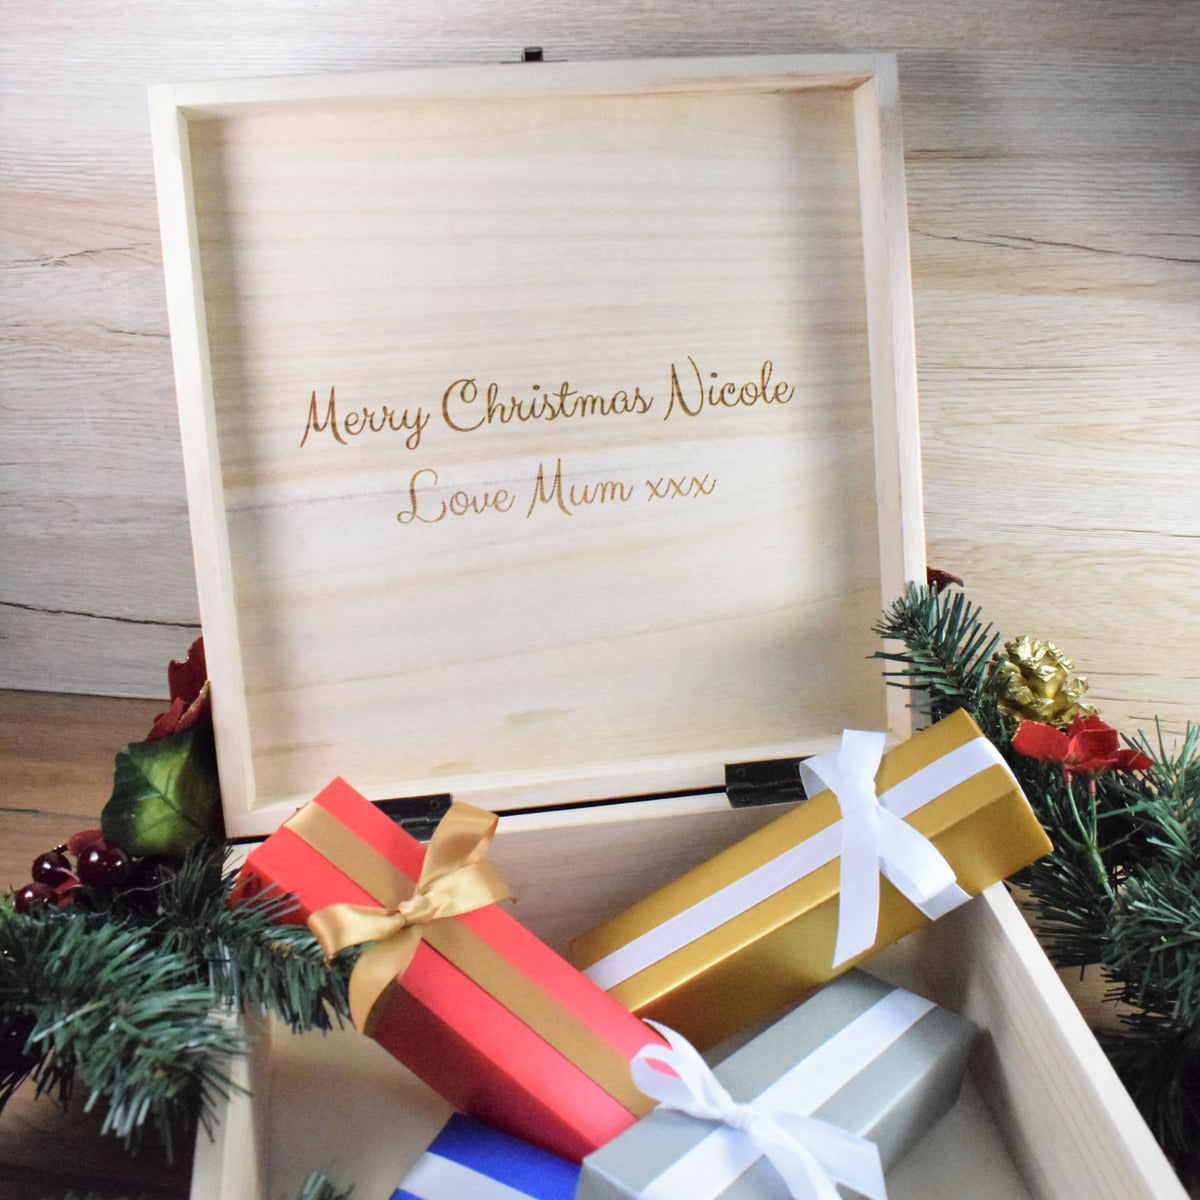 Personalised Wooden Christmas Eve Box - Santa